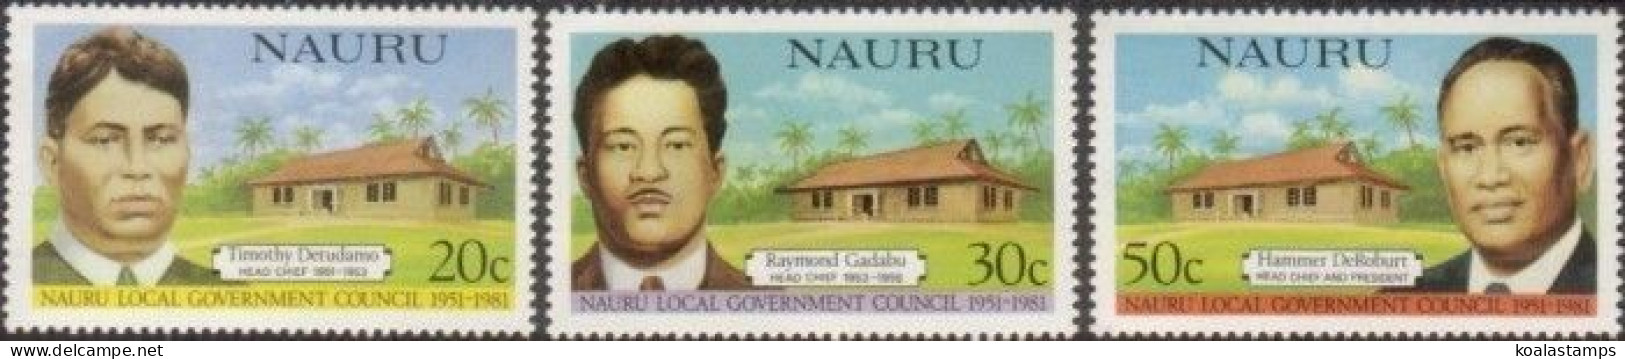 Nauru 1981 SG235-237 Local Government Council Set MNH - Nauru